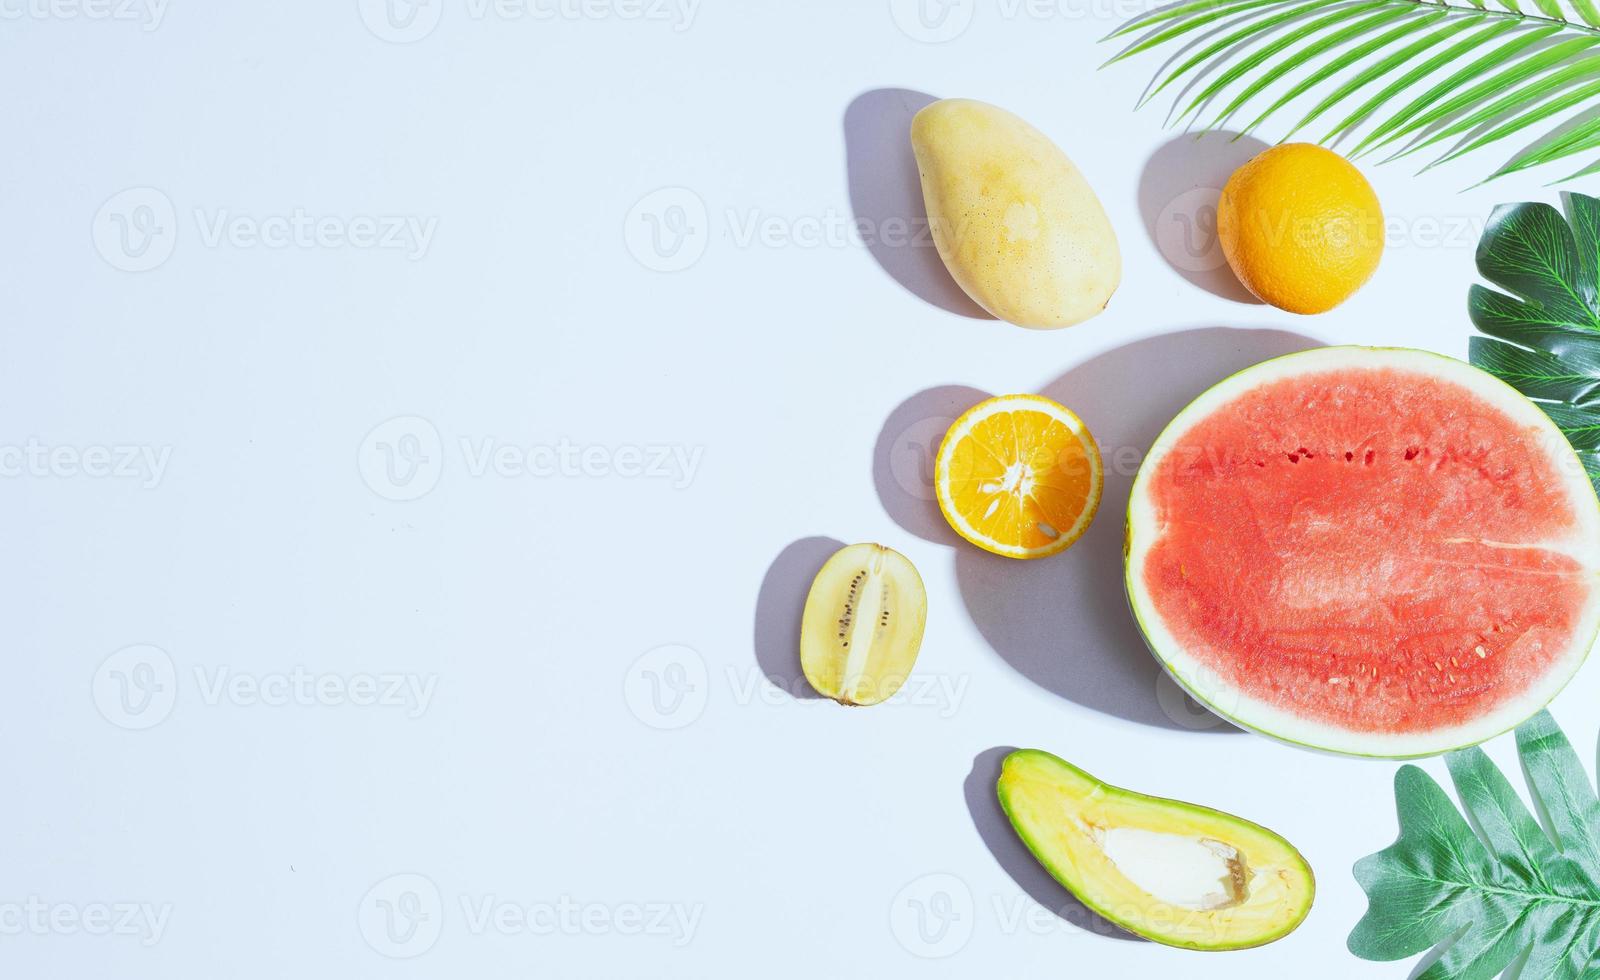 Tropical fruits like mango, orange, watermelon, avocado are arranged on a white background photo